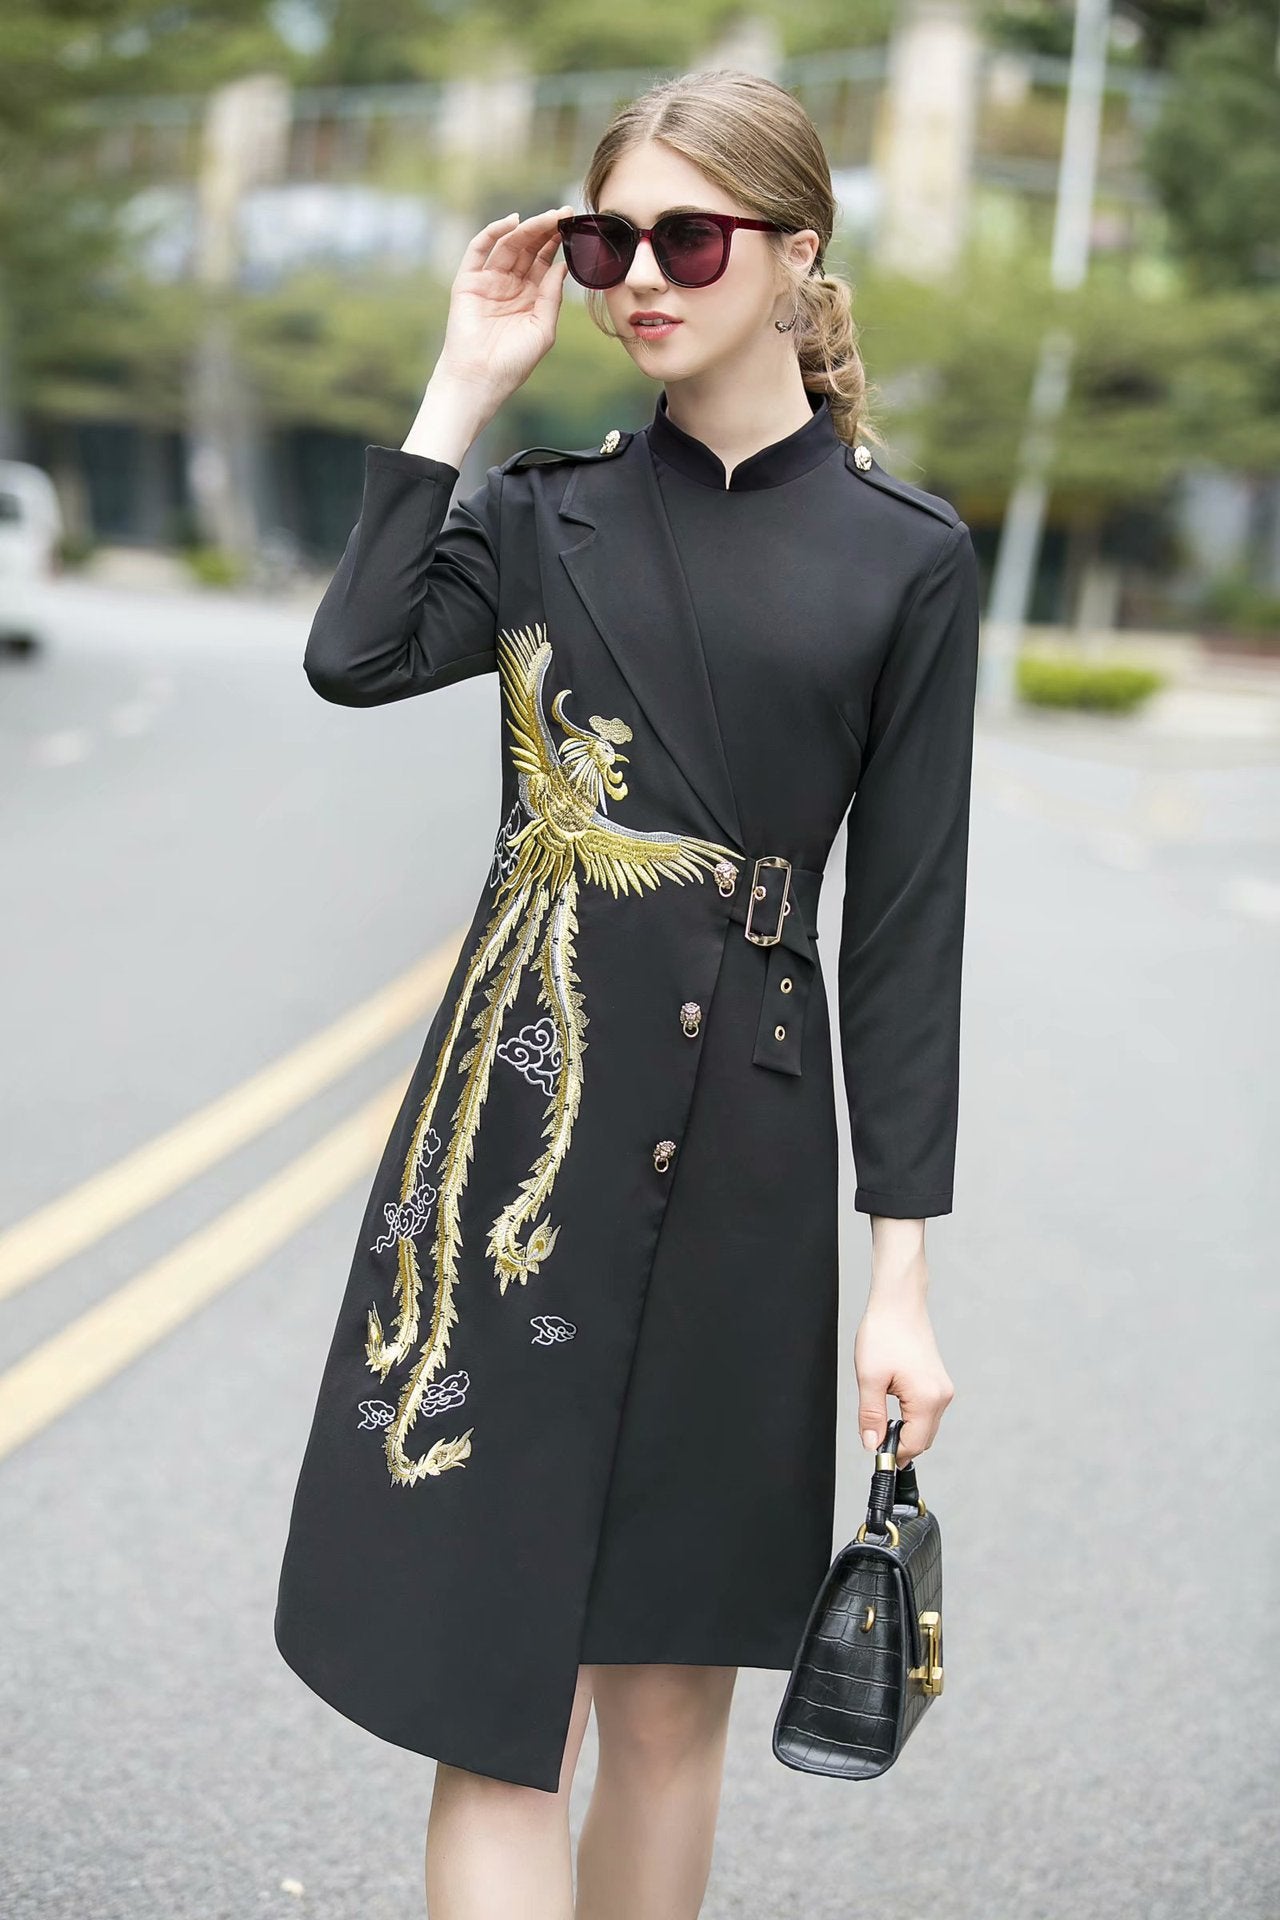 Fashion Designer dress Fall Winter Stand collar Embroidery Elegant Asymmetrical Coat